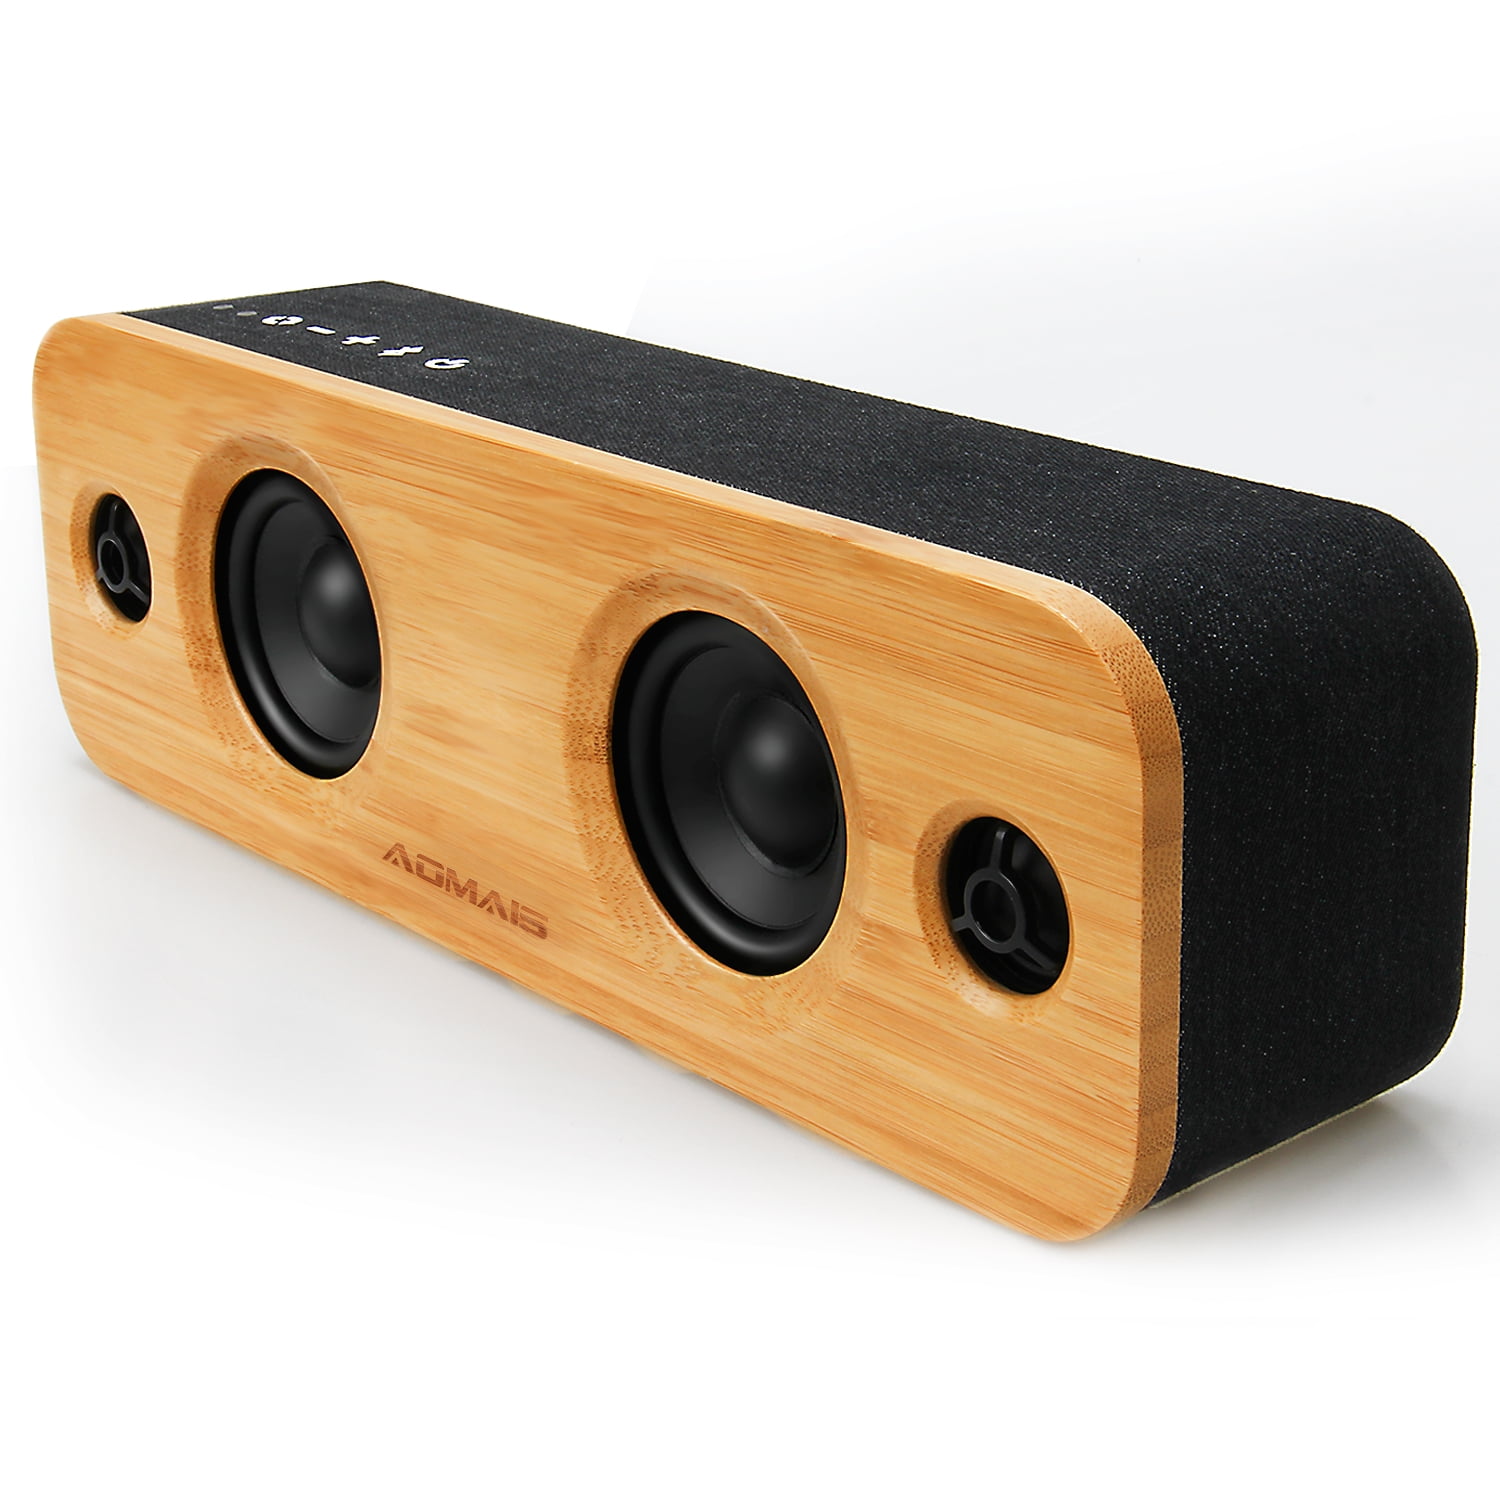 AOMAIS LIFE 30W Bluetooth Speakers, Loud Bamboo Wood Home Audio